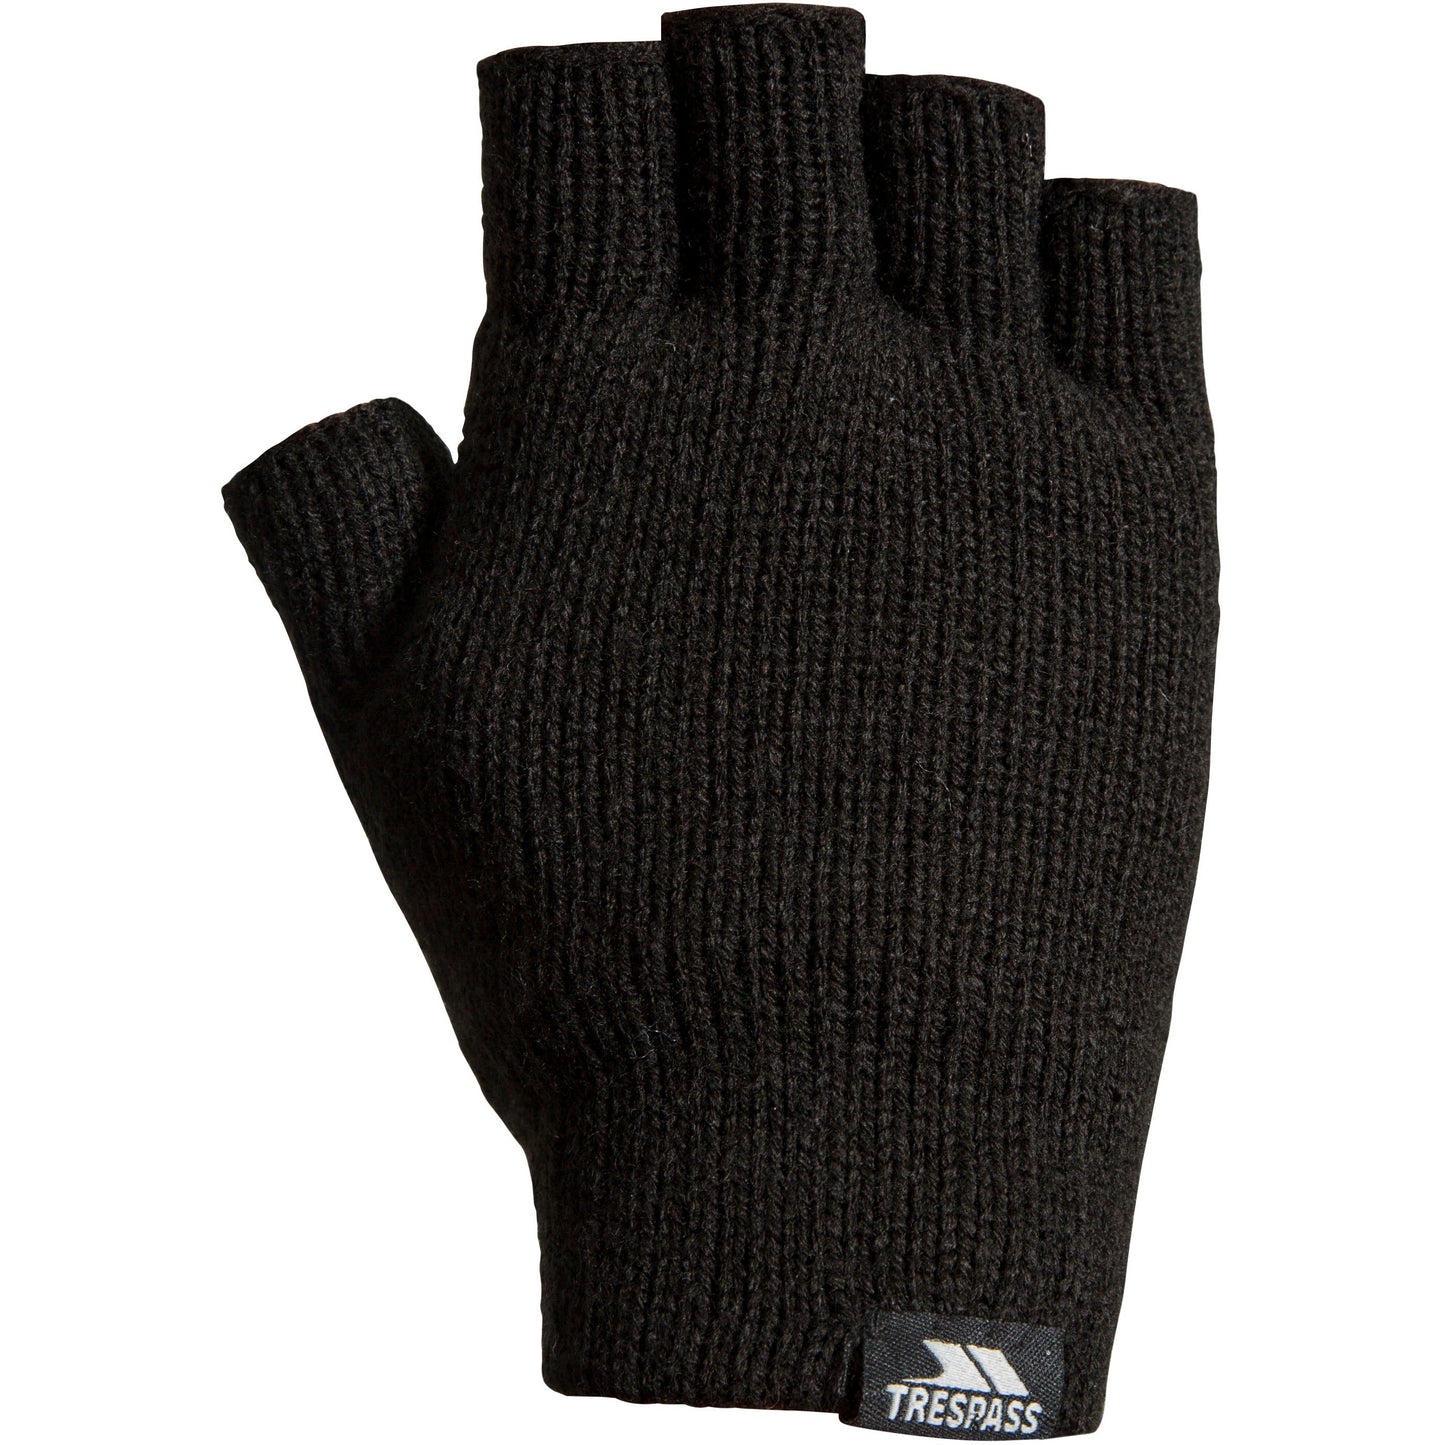 Dita Unisex Adults Fingerless Gloves in Black